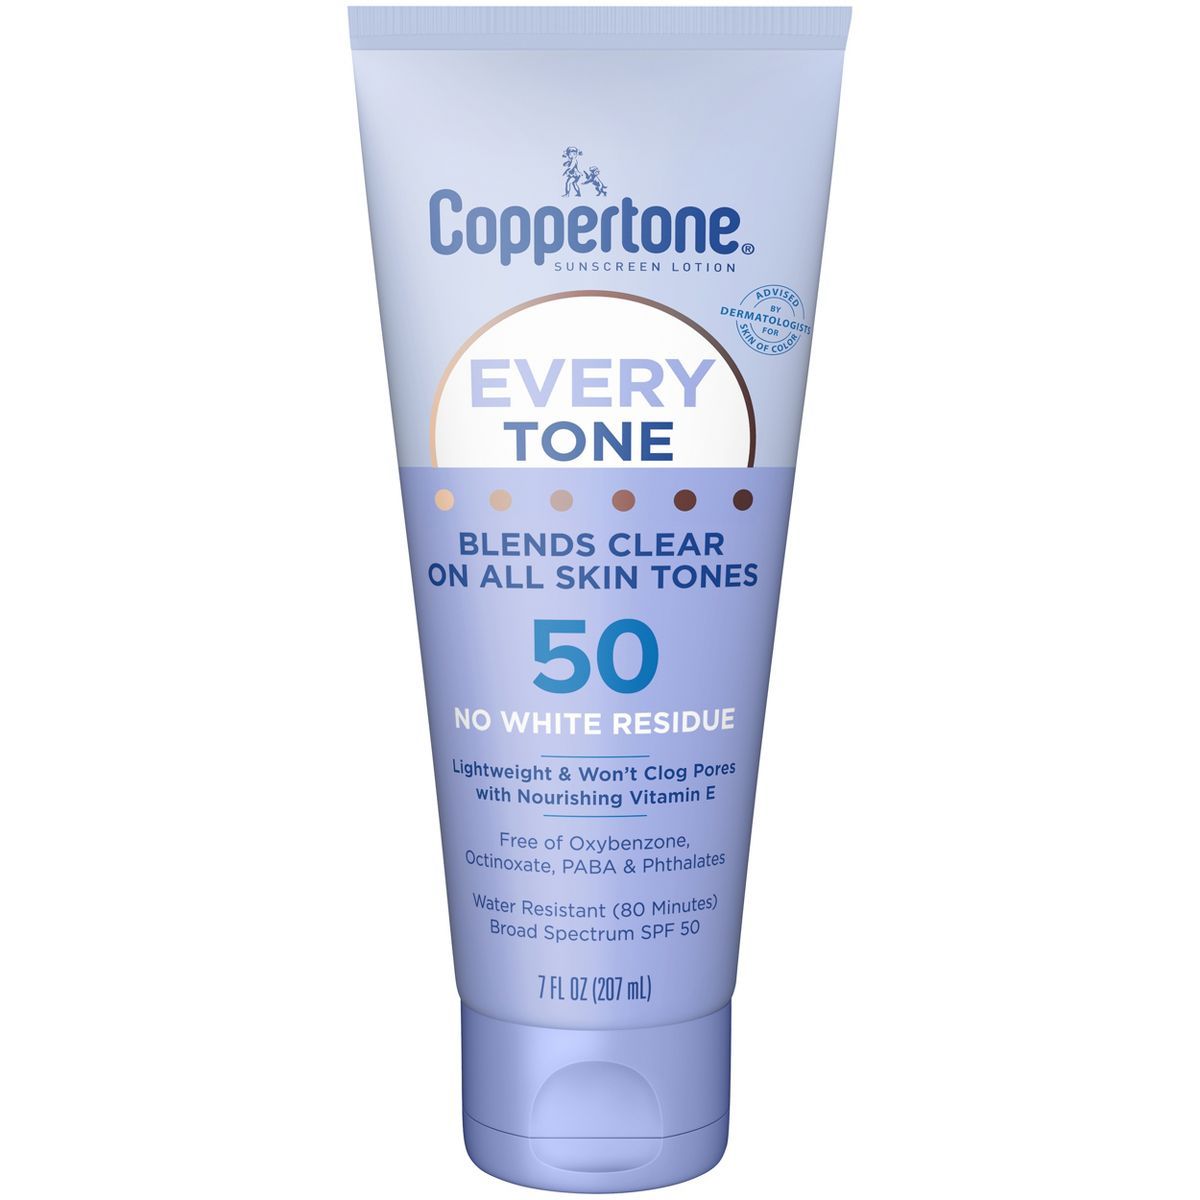 Coppertone Every Tone Sunscreen Lotion - SPF 50 - 7 fl oz | Target